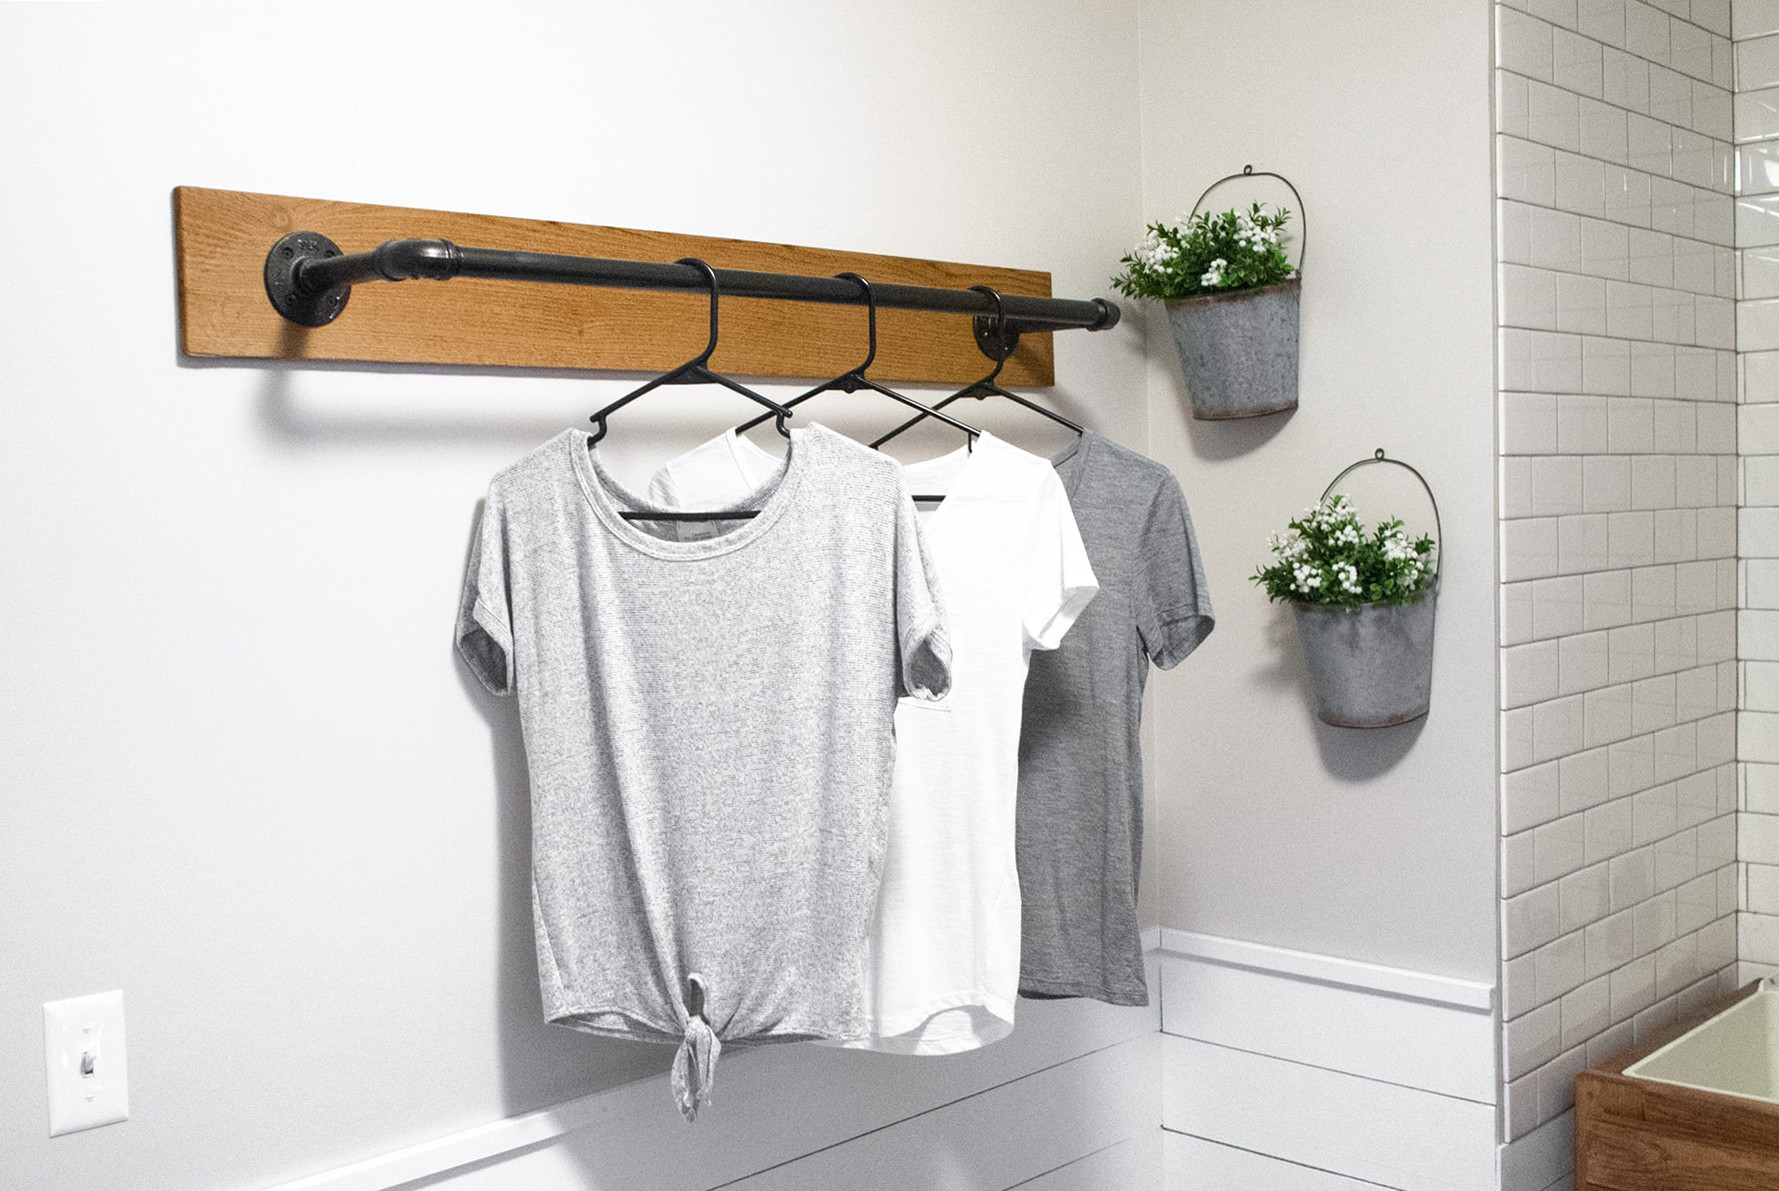 DIY Hanging Clothes Rack
 DIY Wall Mounted Clothing Rack